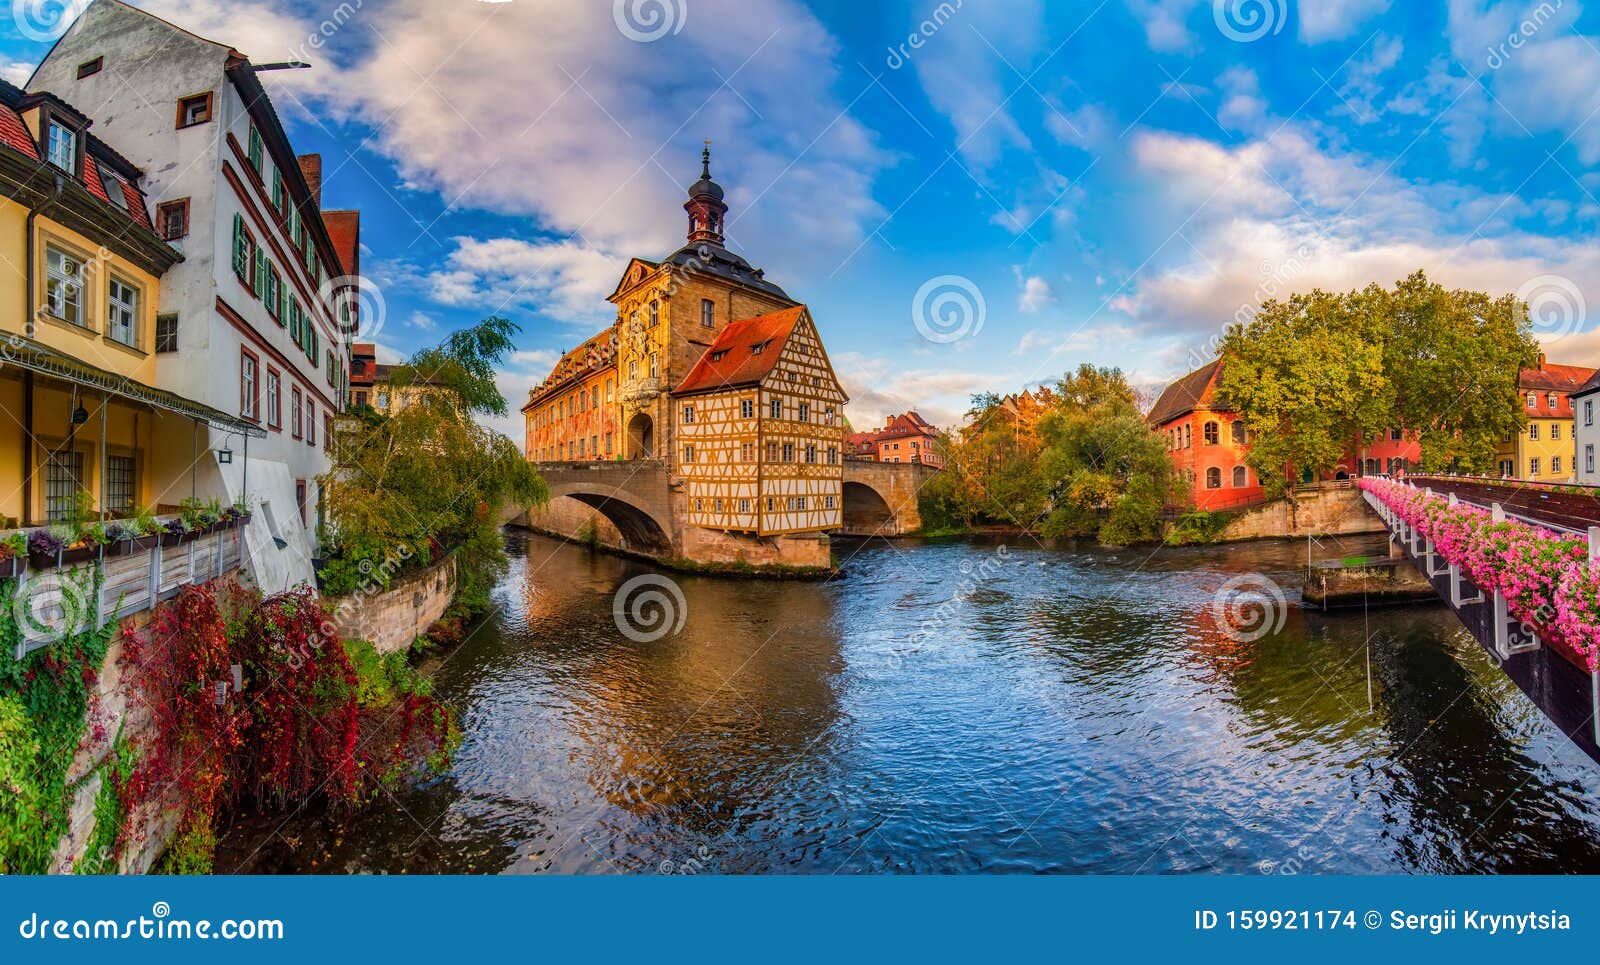 amazing panoramic view of historic city center of bamberg, germany. unesco world heritage site